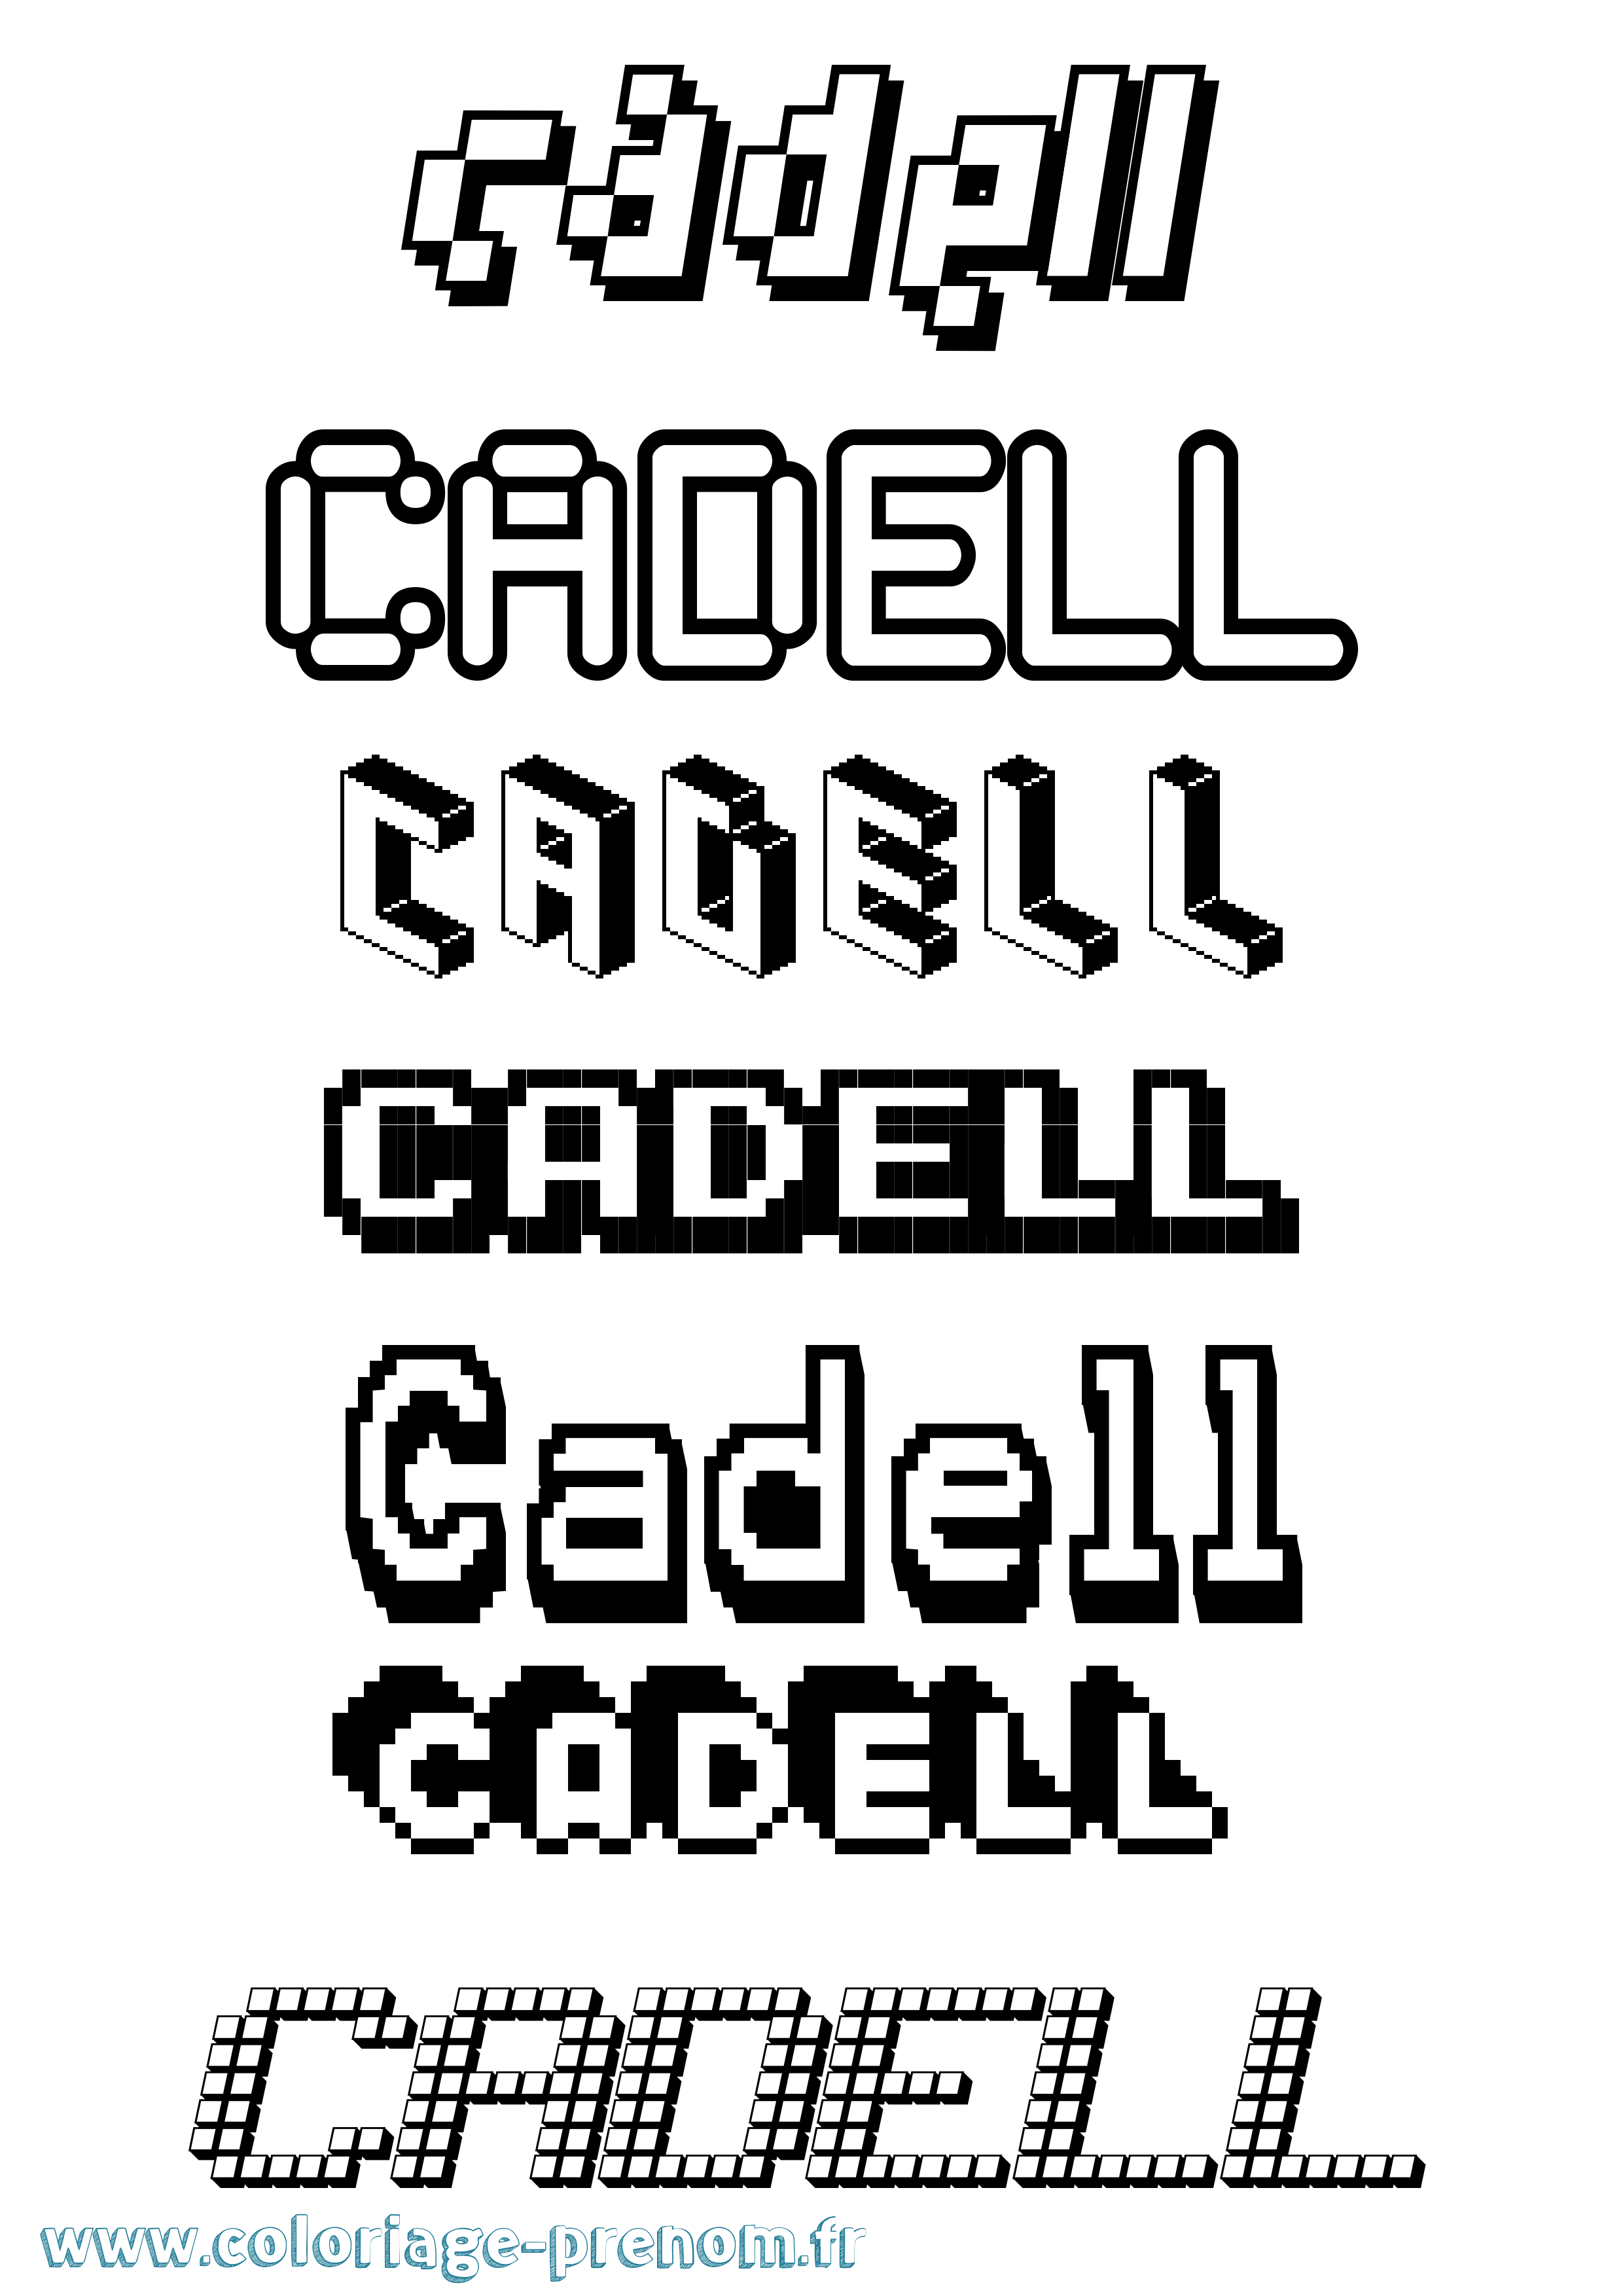 Coloriage prénom Cadell Pixel